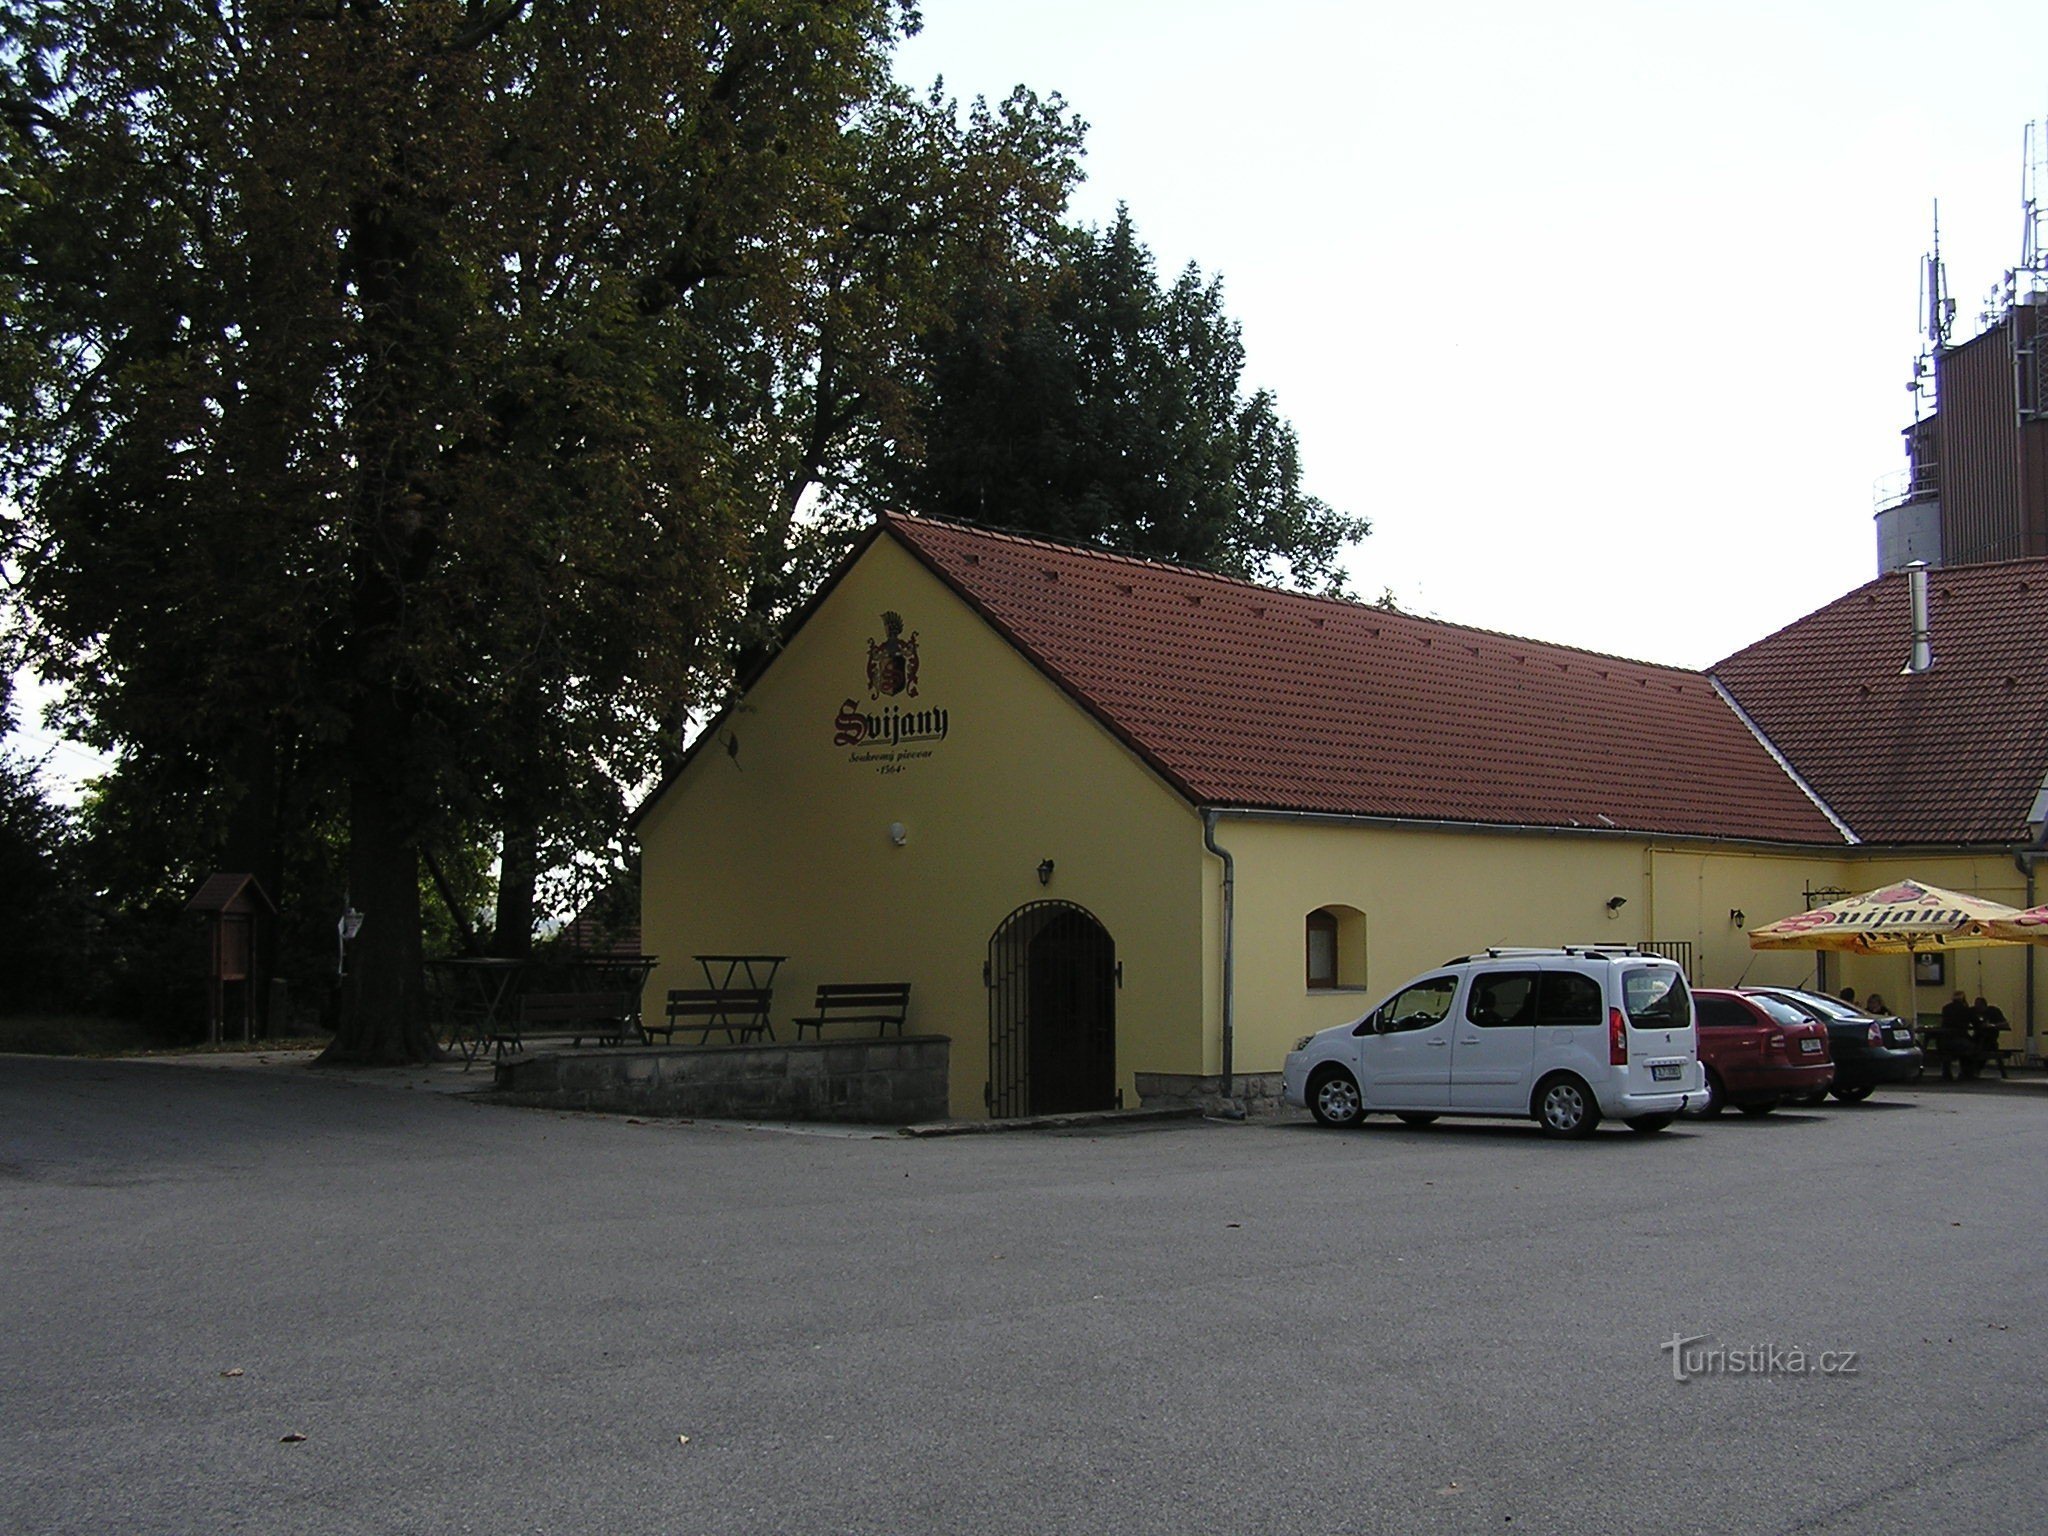 Brasserie Svijany (8/2014)